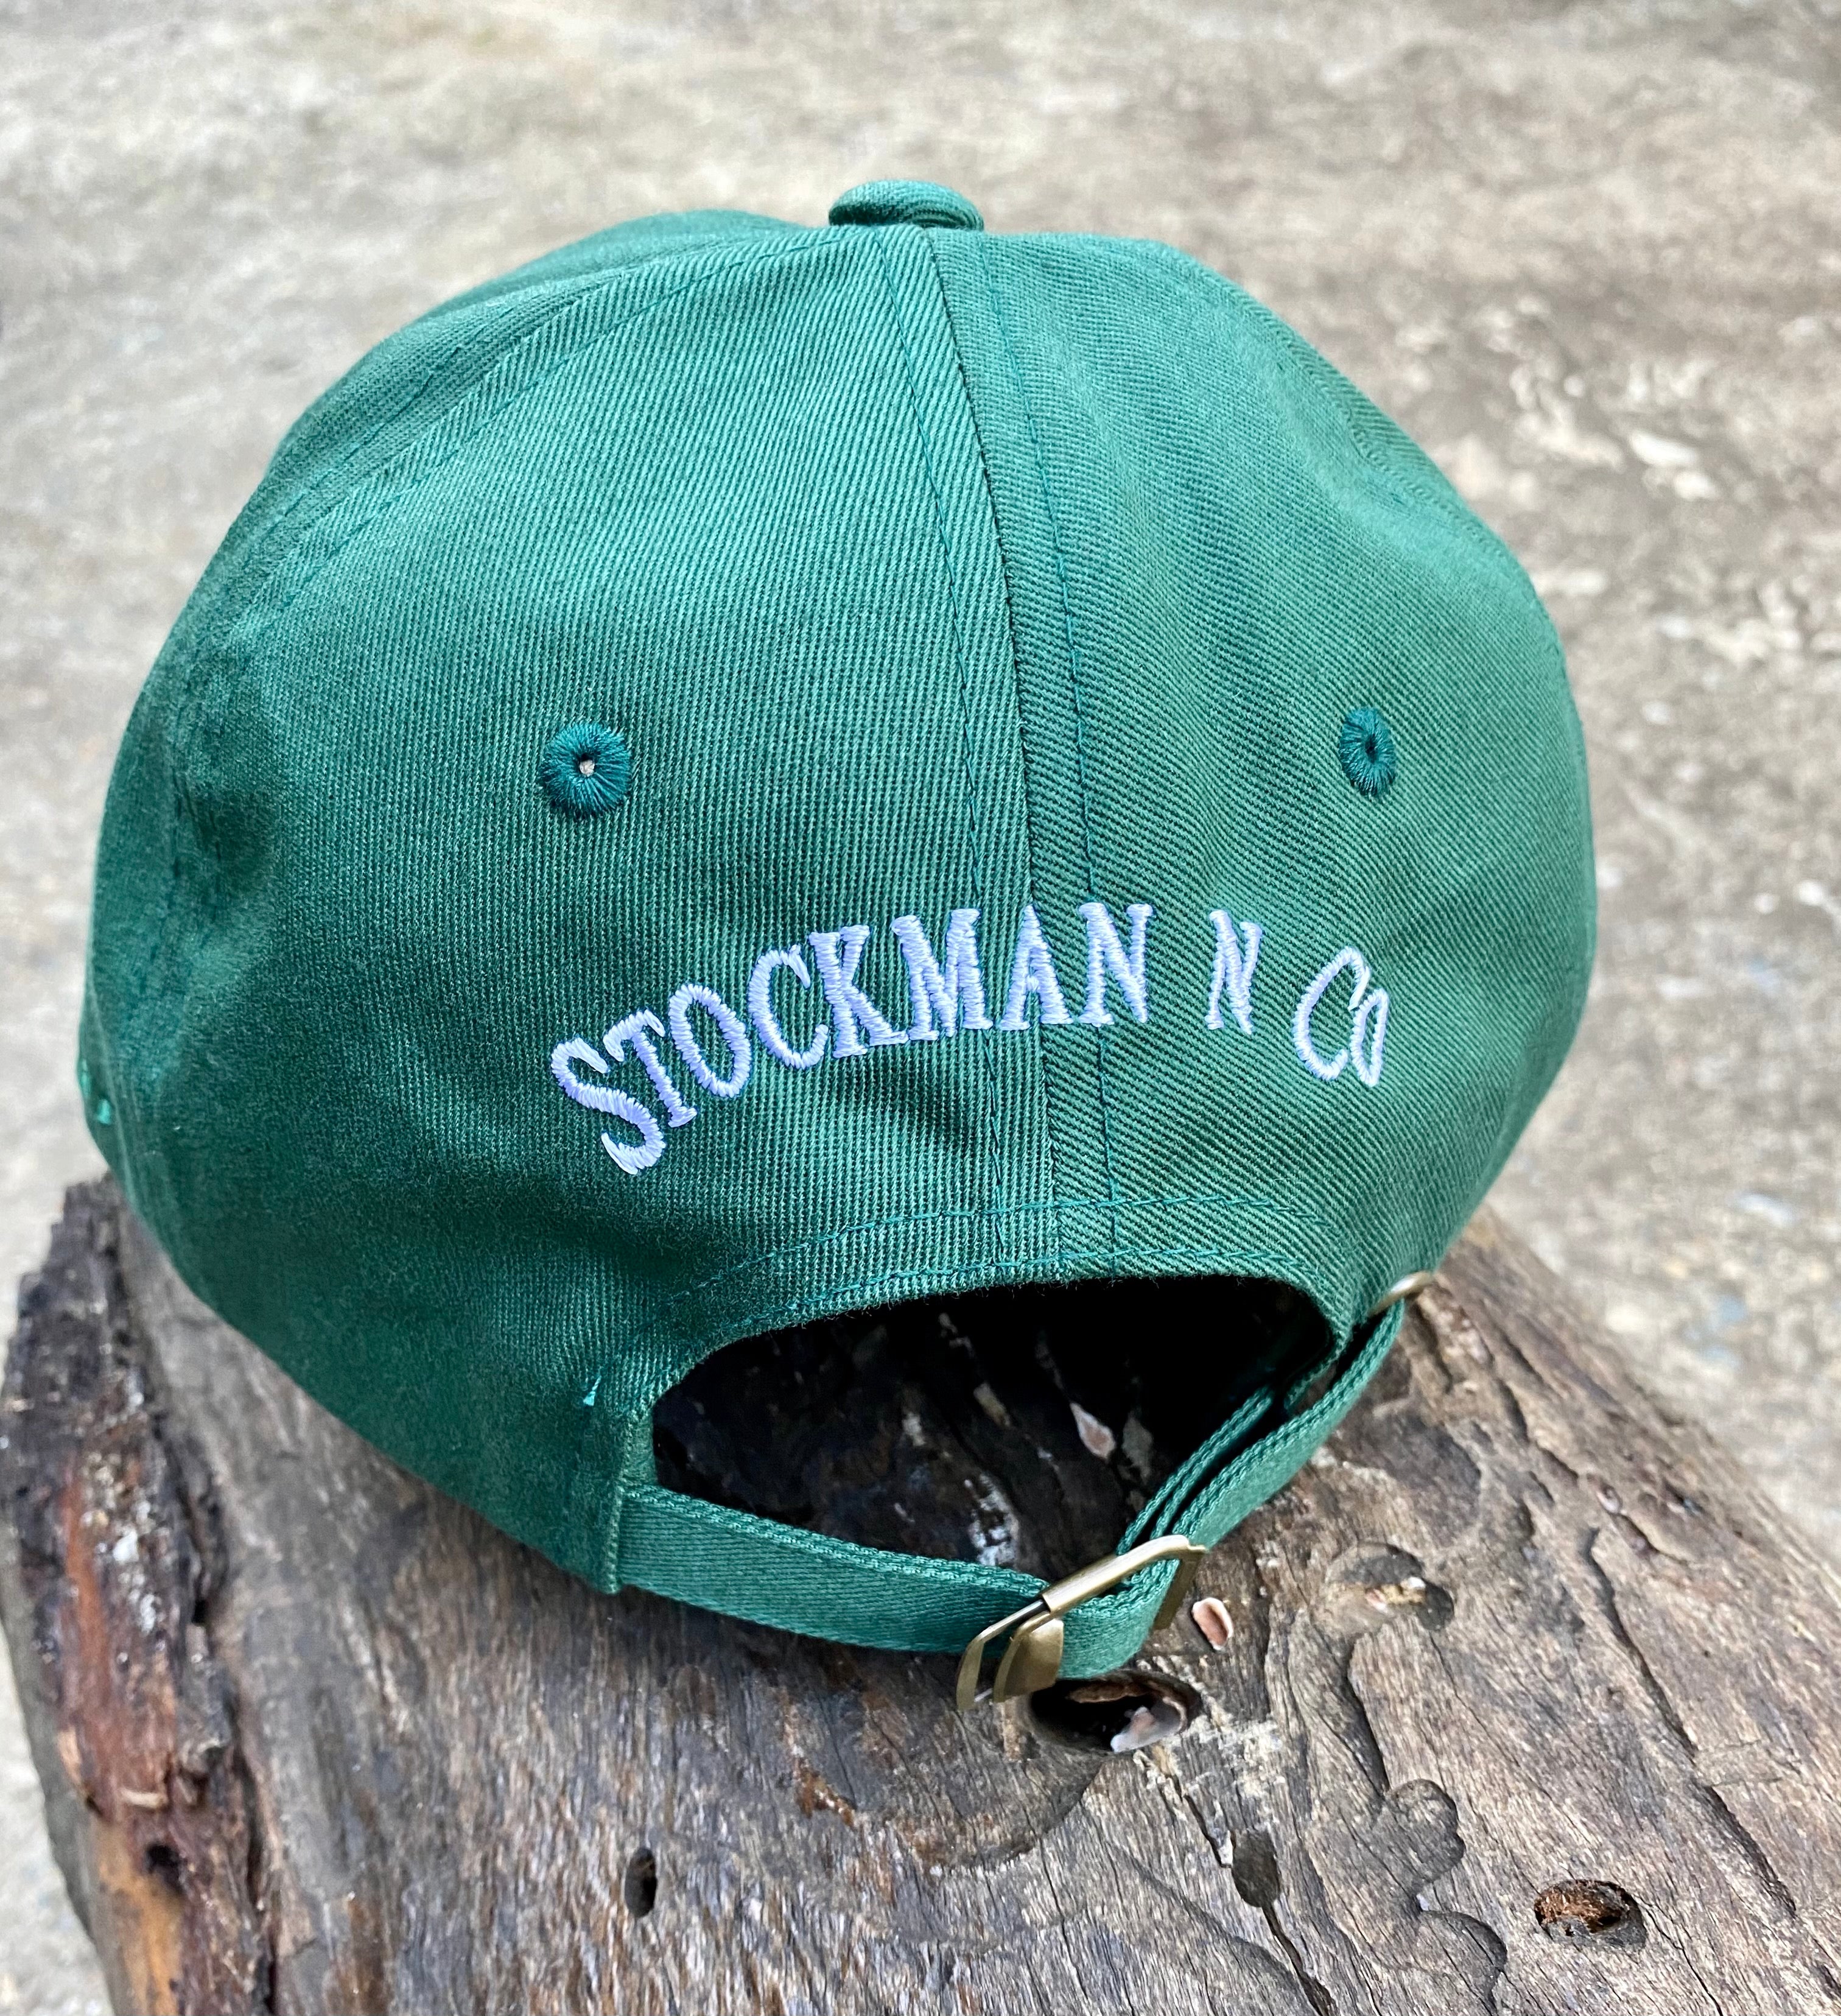 Drover Cap - STOCKMAN N CO